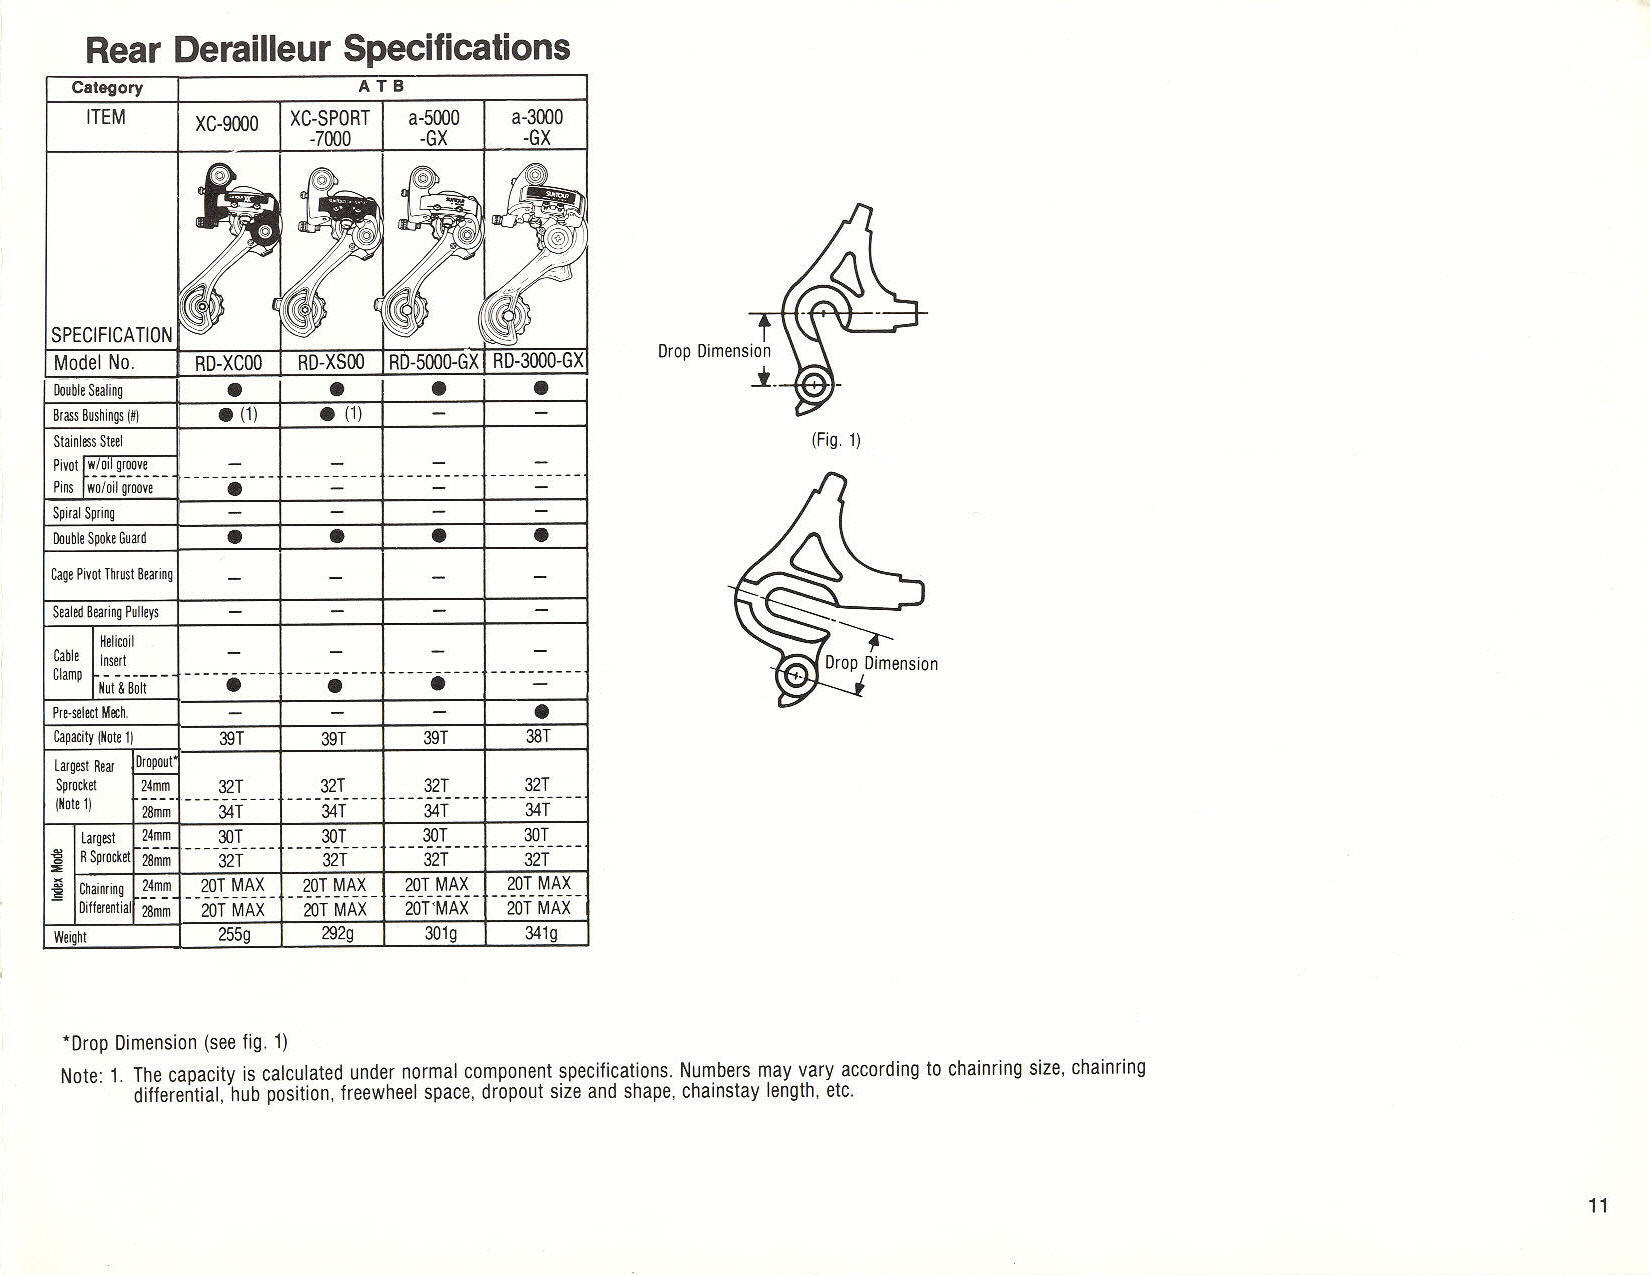 SunTour dealer catalog (1987)